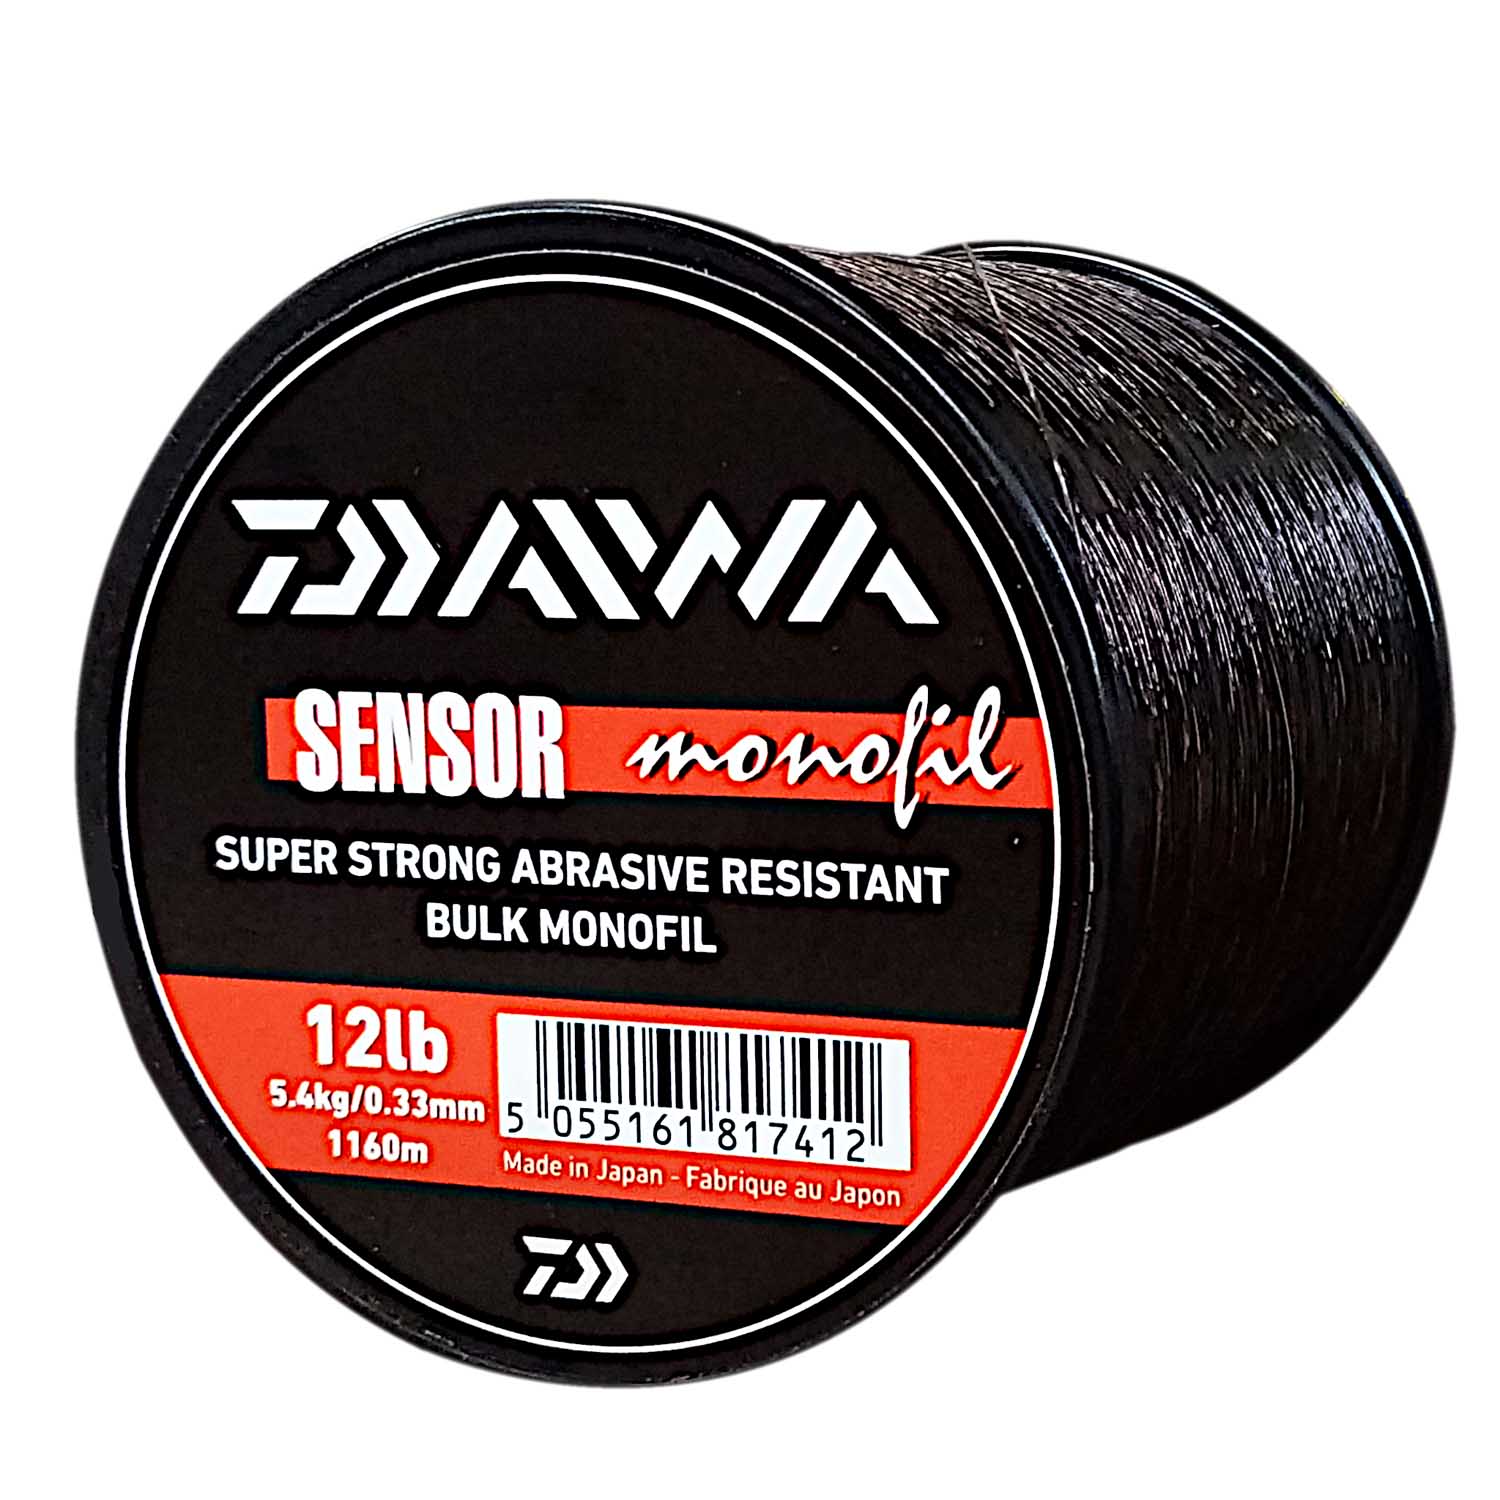 Daiwa Sensor Carp Nylon Fishing Line 5.4KG/12LB .33MM Colour Brown 1160m  Spool - Showspace